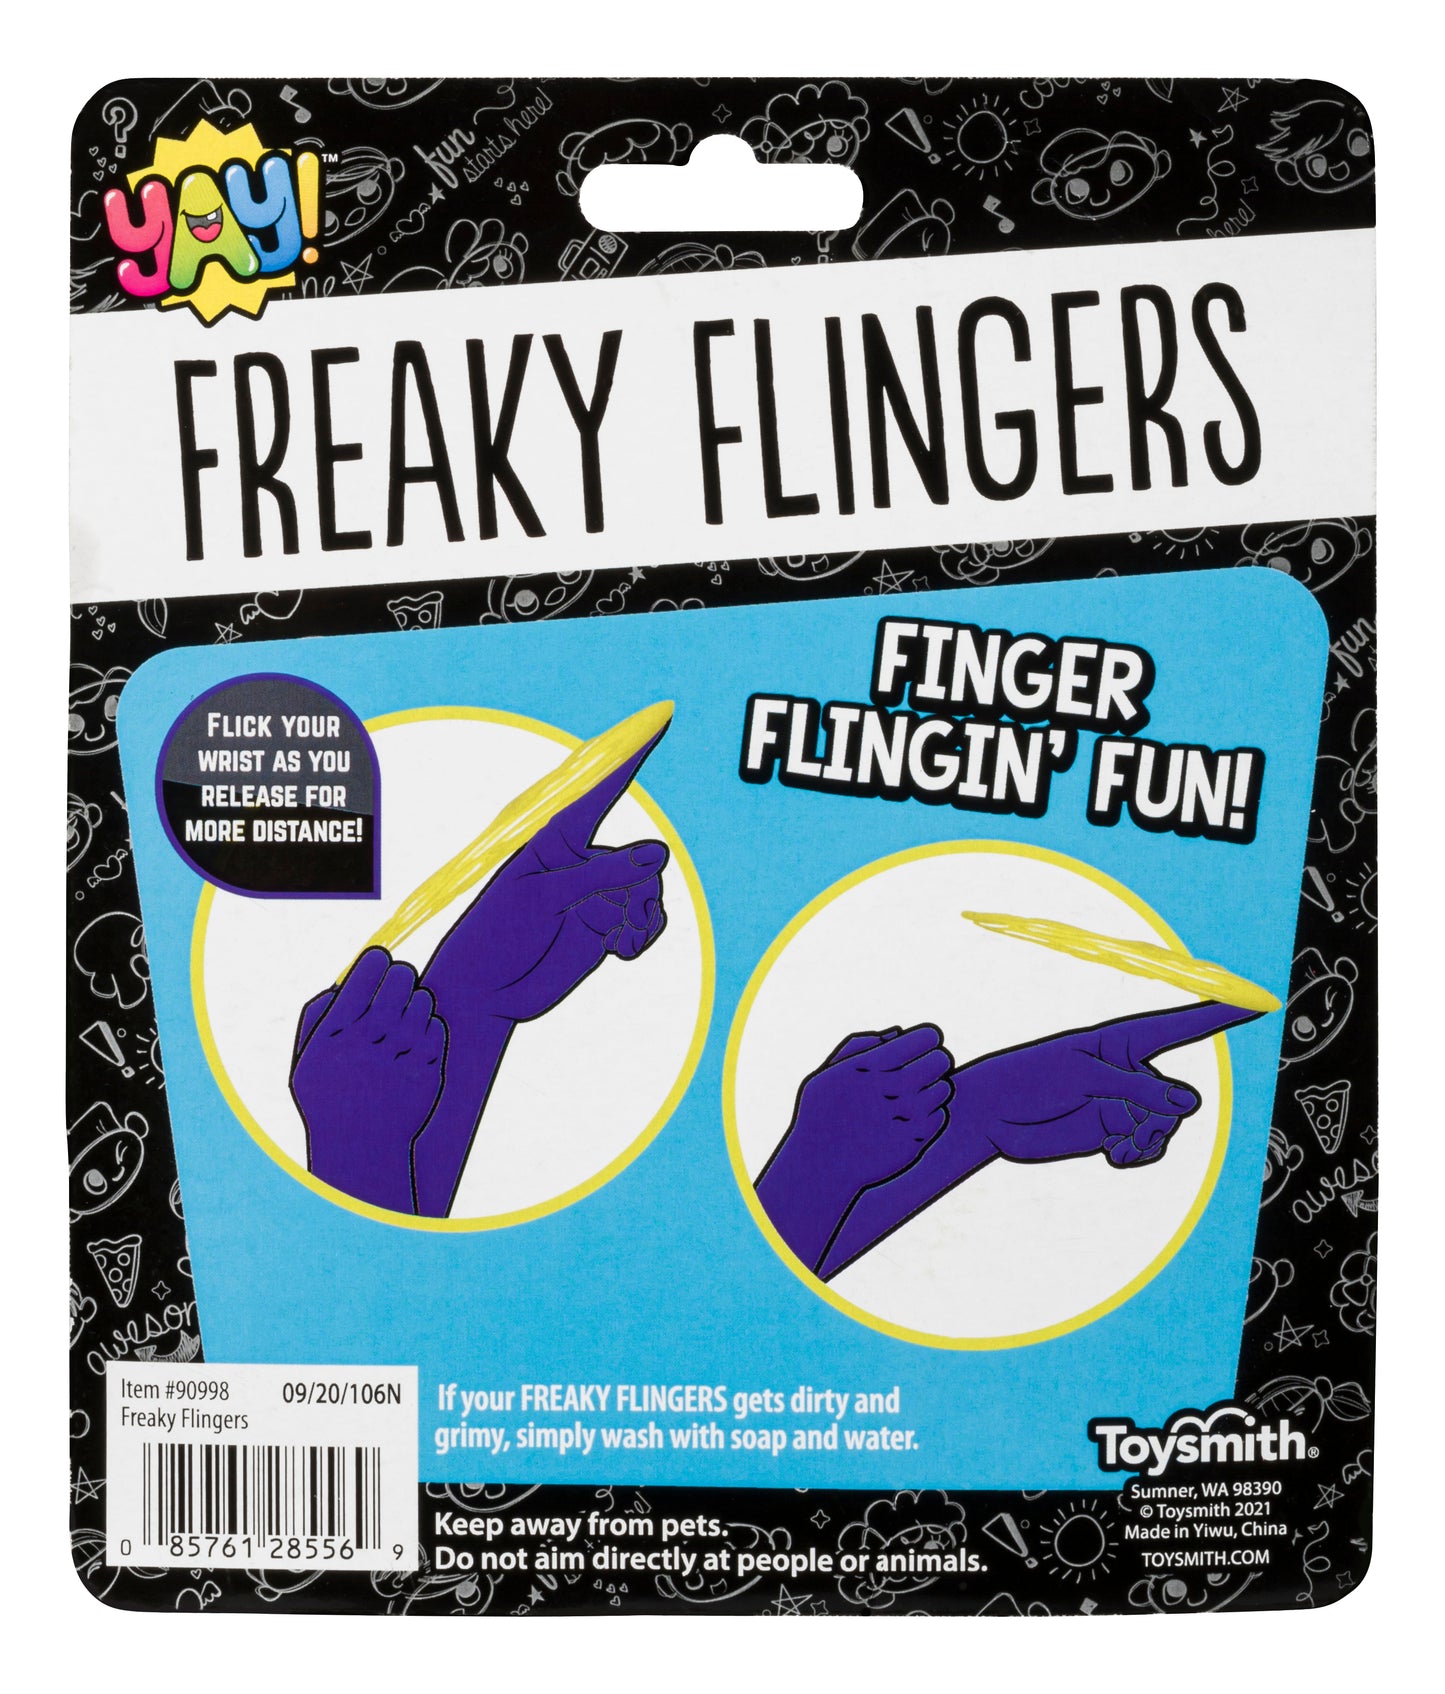 YAY! Freaky Flingers